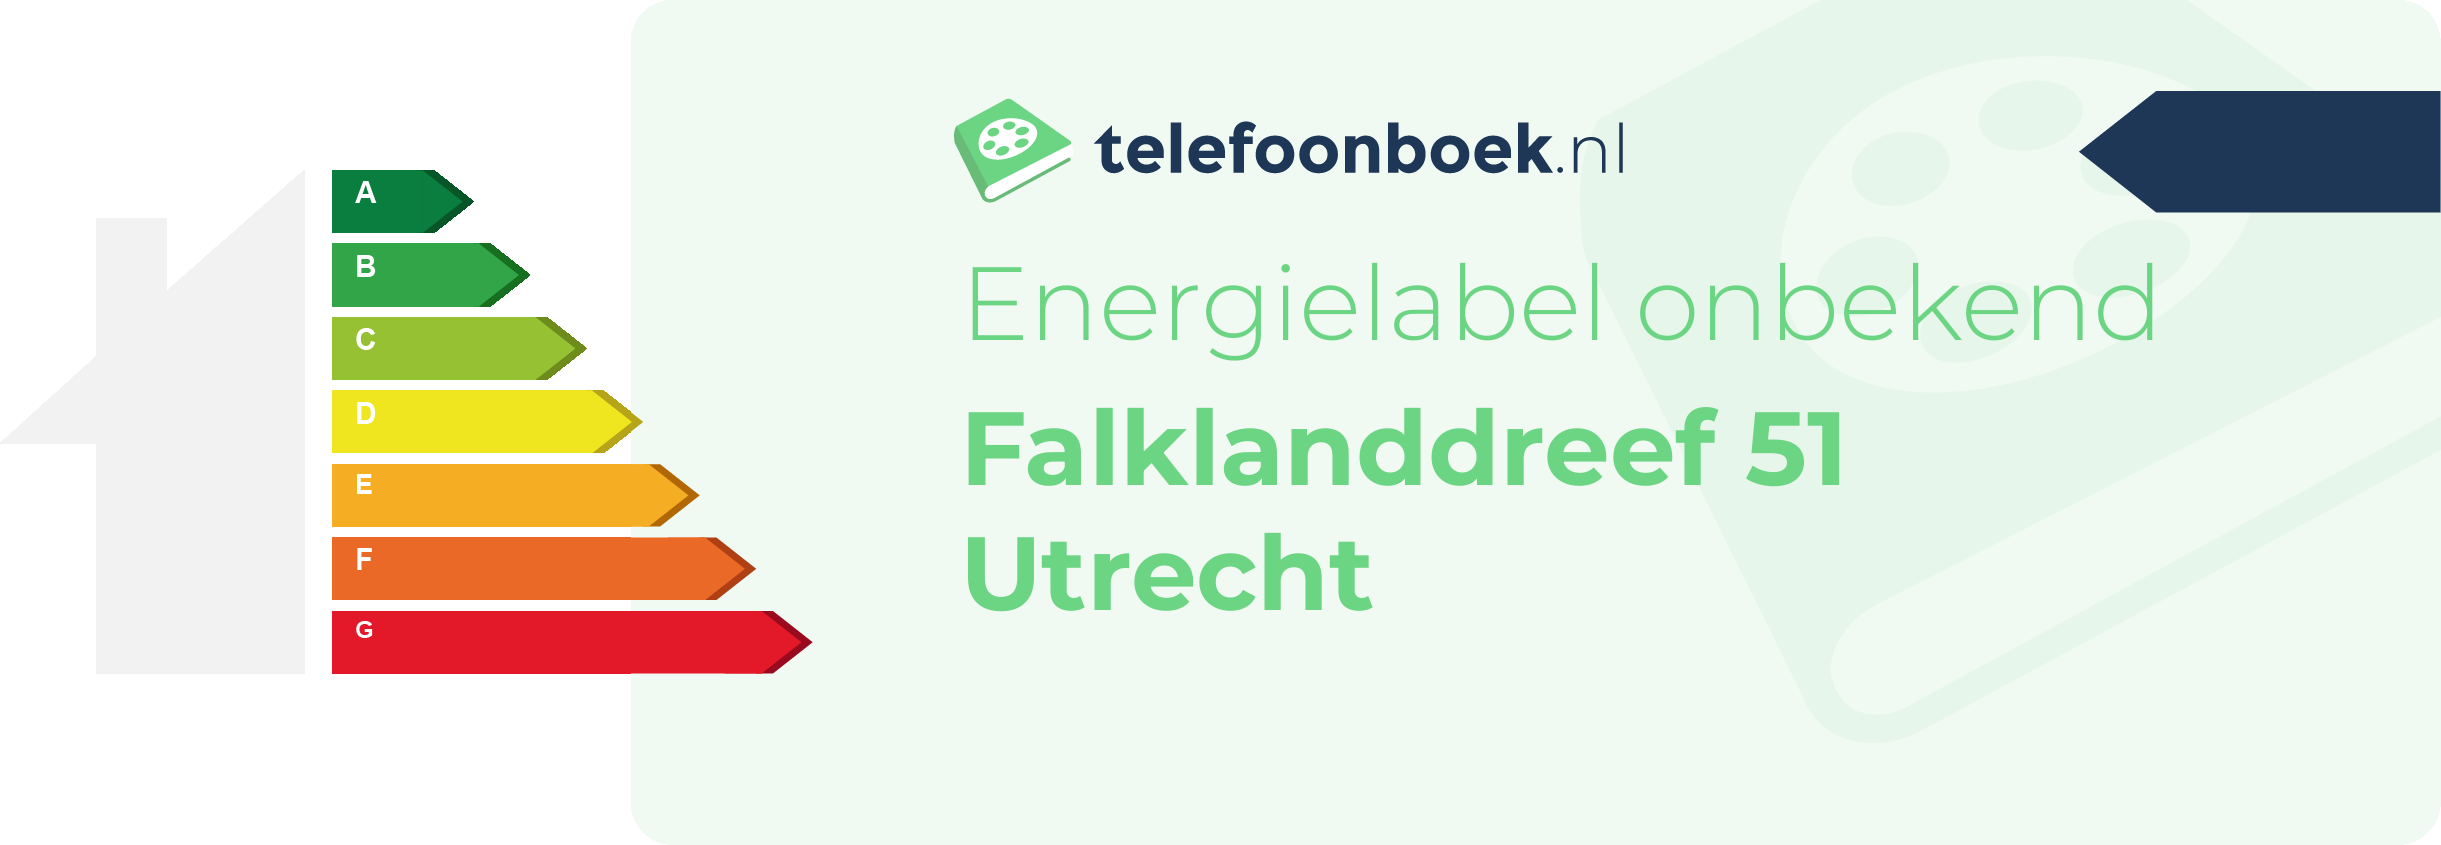 Energielabel Falklanddreef 51 Utrecht